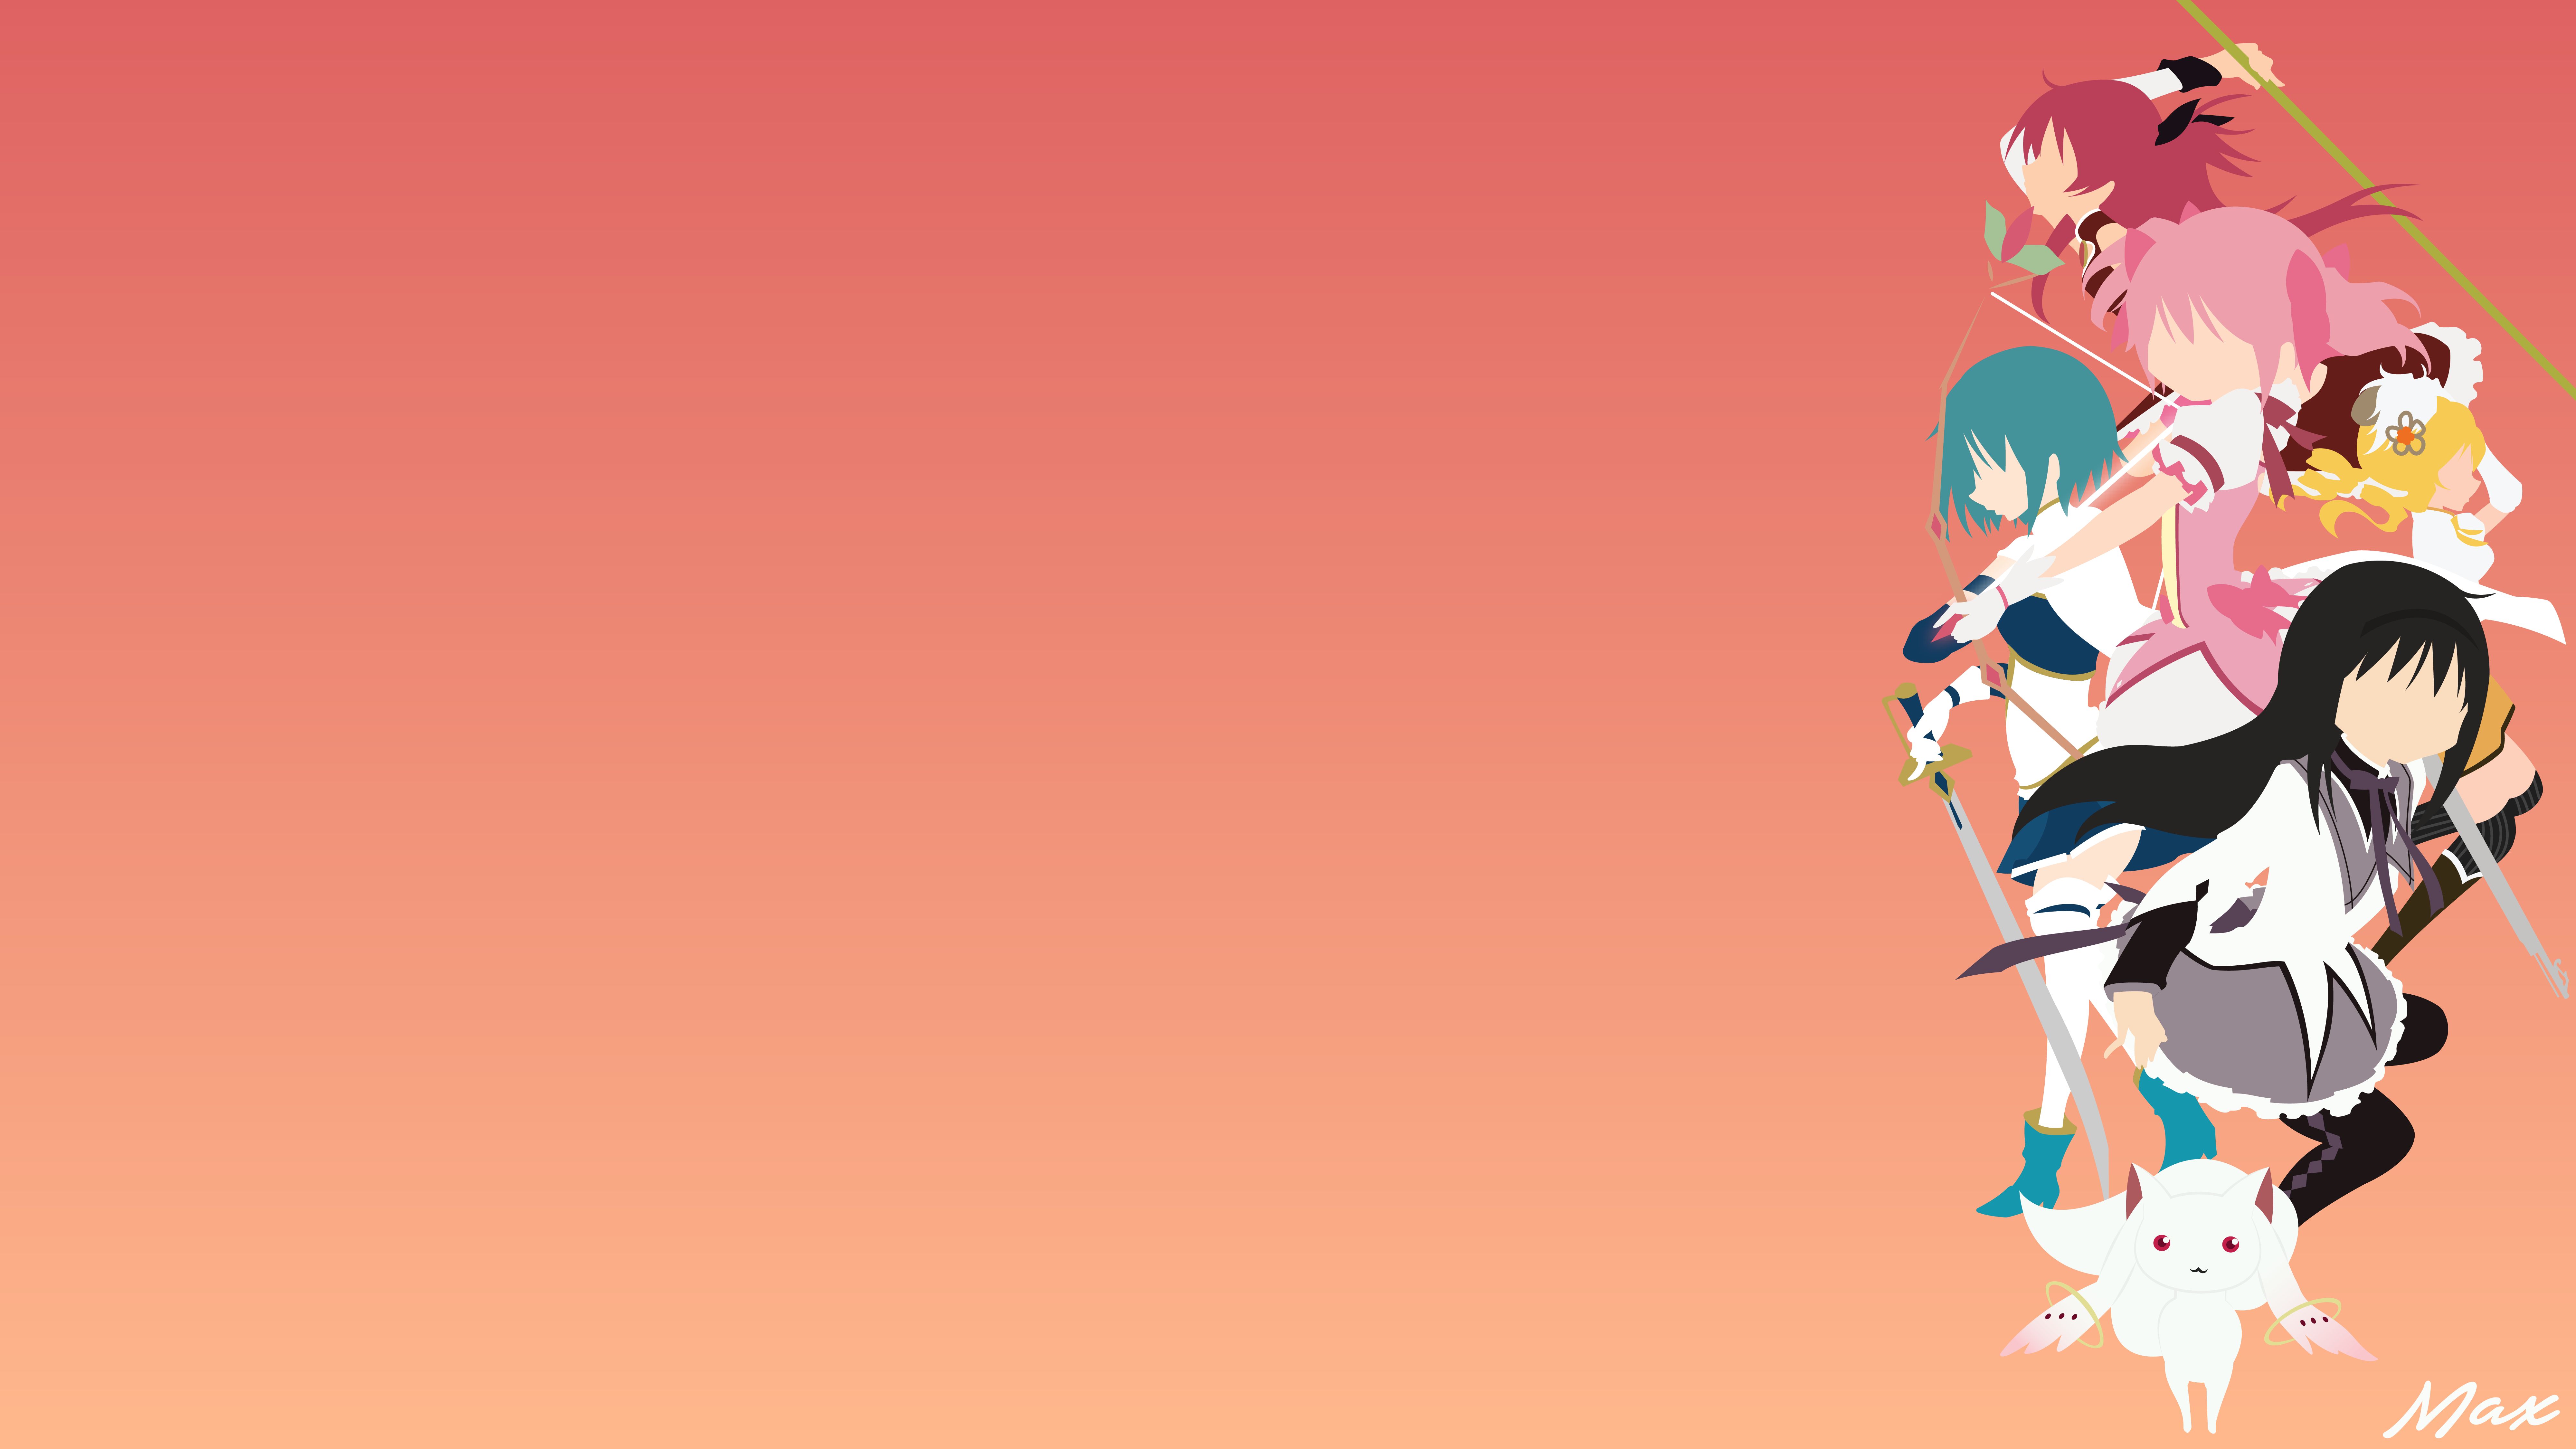 Baixe gratuitamente a imagem Anime, Kyōko Sakura, Mahô Shôjo Madoka Magika: Puella Magi Madoka Magica, Homura Akemi, Madoka Kaname, Sayaka Miki, Kyuubey (Puella Magi Madoka Magica) na área de trabalho do seu PC